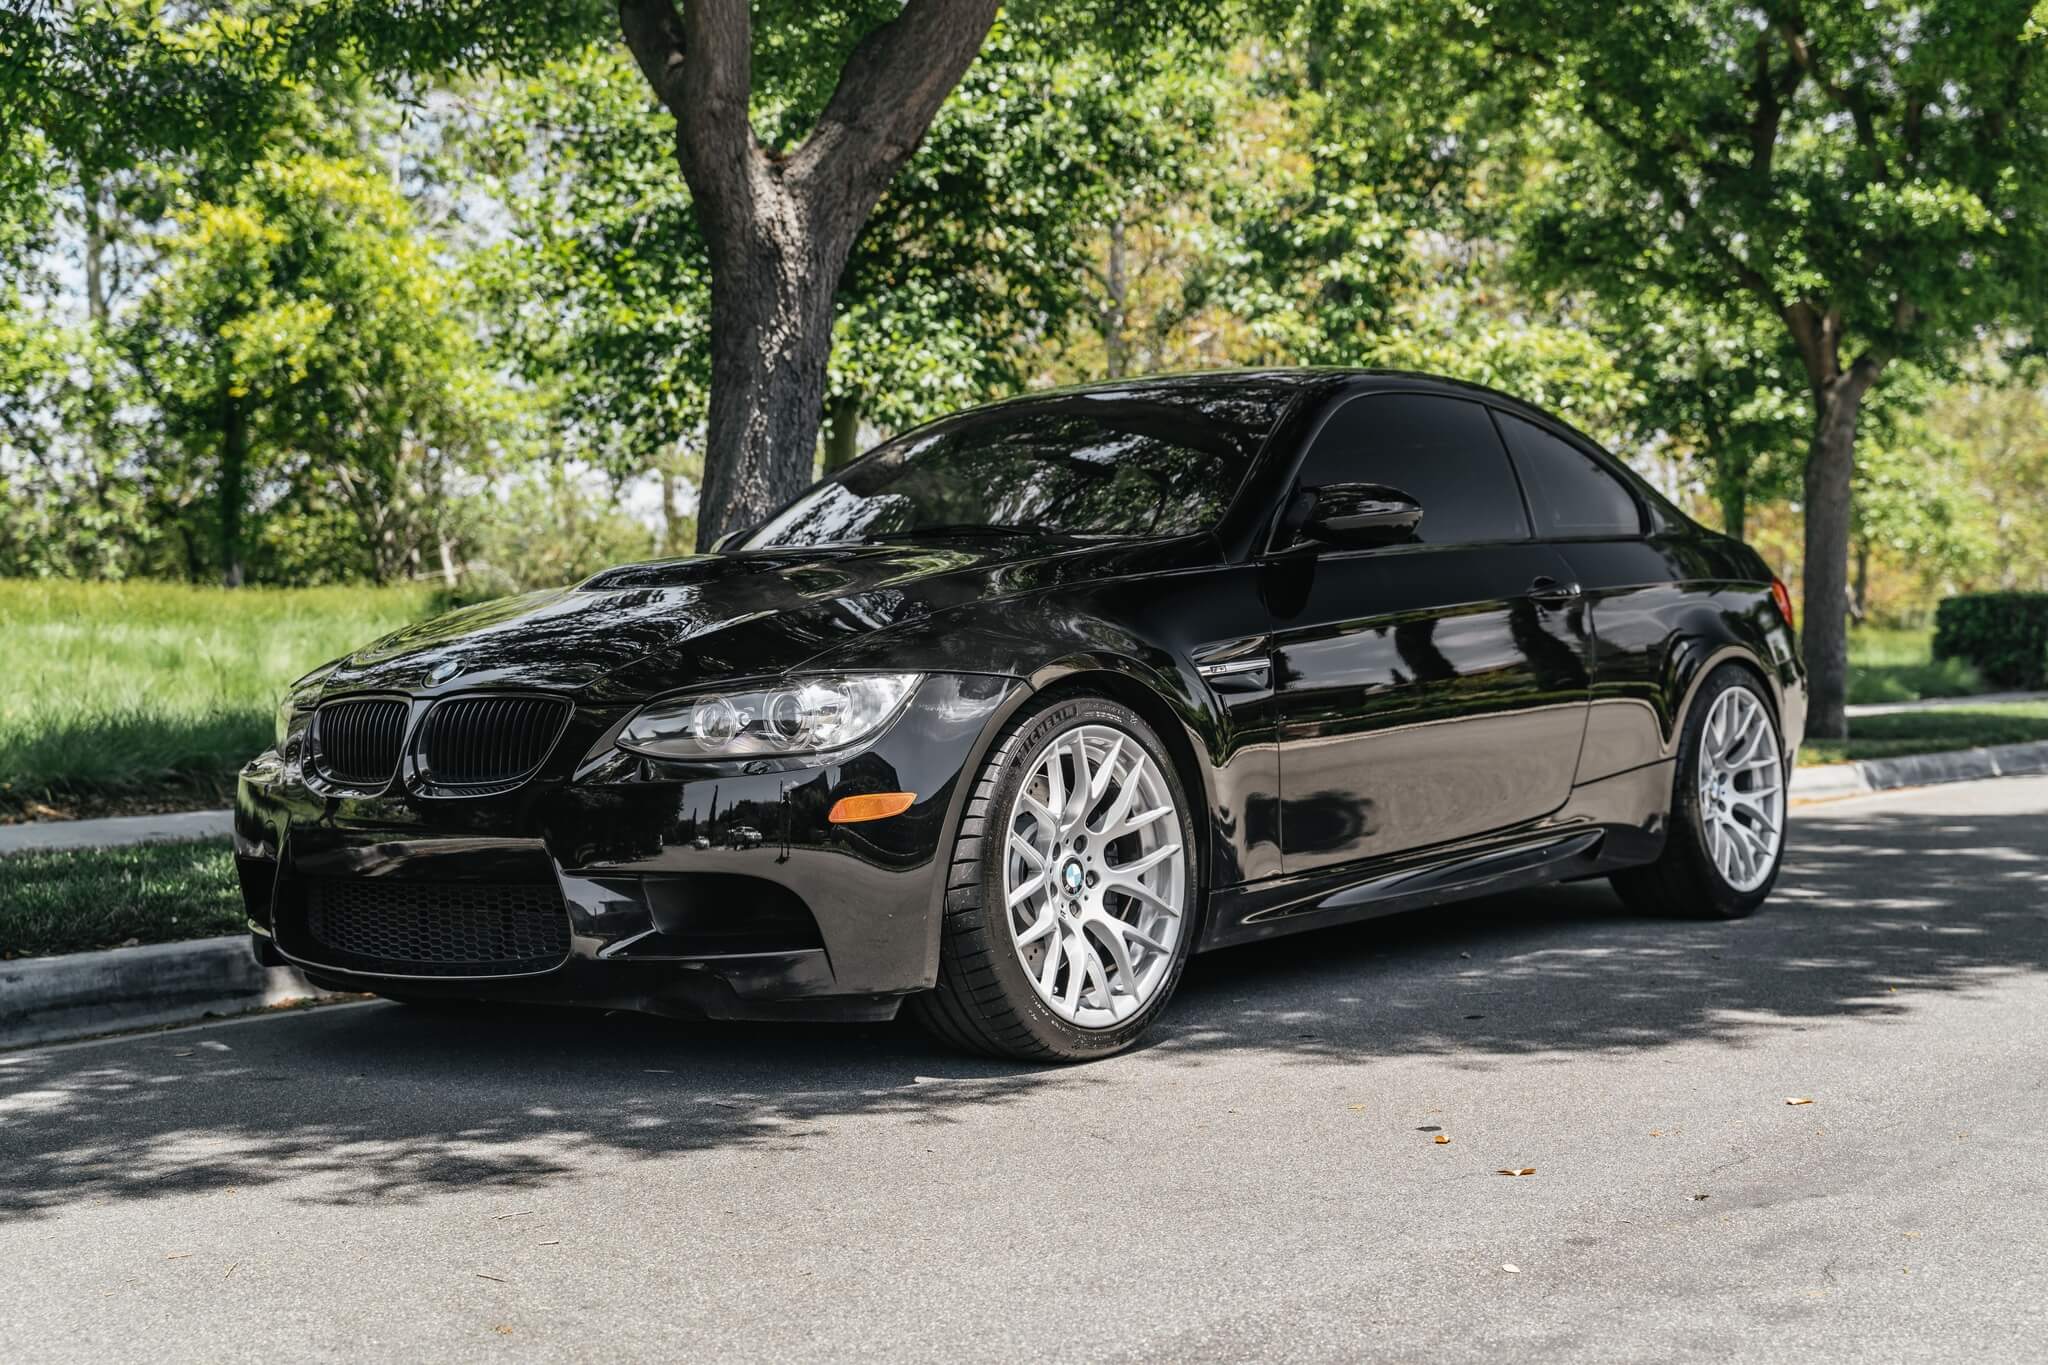 https://www.pcarmarket.com/static/media/uploads/galleries/photos/uploads/galleries/29185-amin-bmw-black/.thumbnails/2013_BMW_M3_20230509-_001.jpg/2013_BMW_M3_20230509-_001-tiny-2048x0-0.5x0.jpg